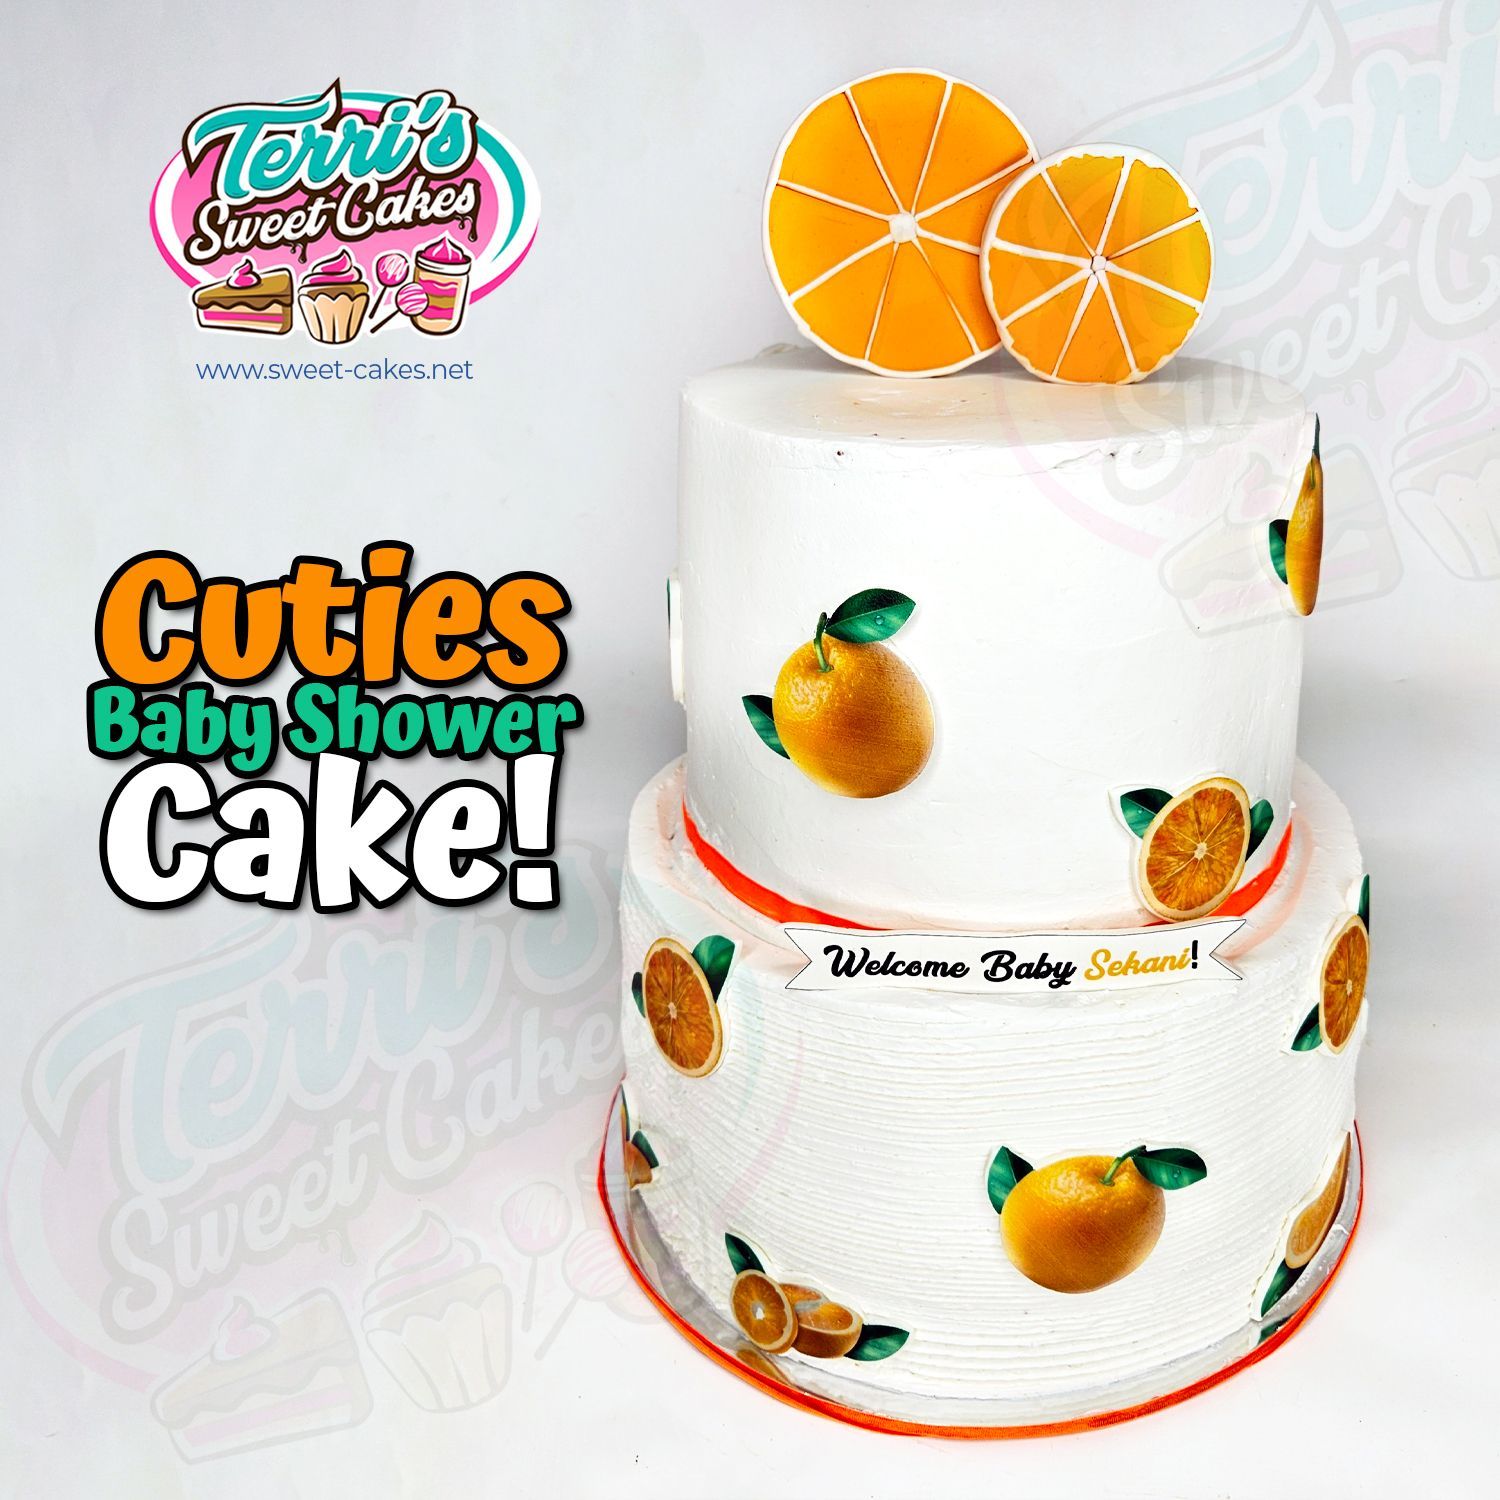 Custom Cuties Baby Shower Cake by Terri's Sweet Cakes!